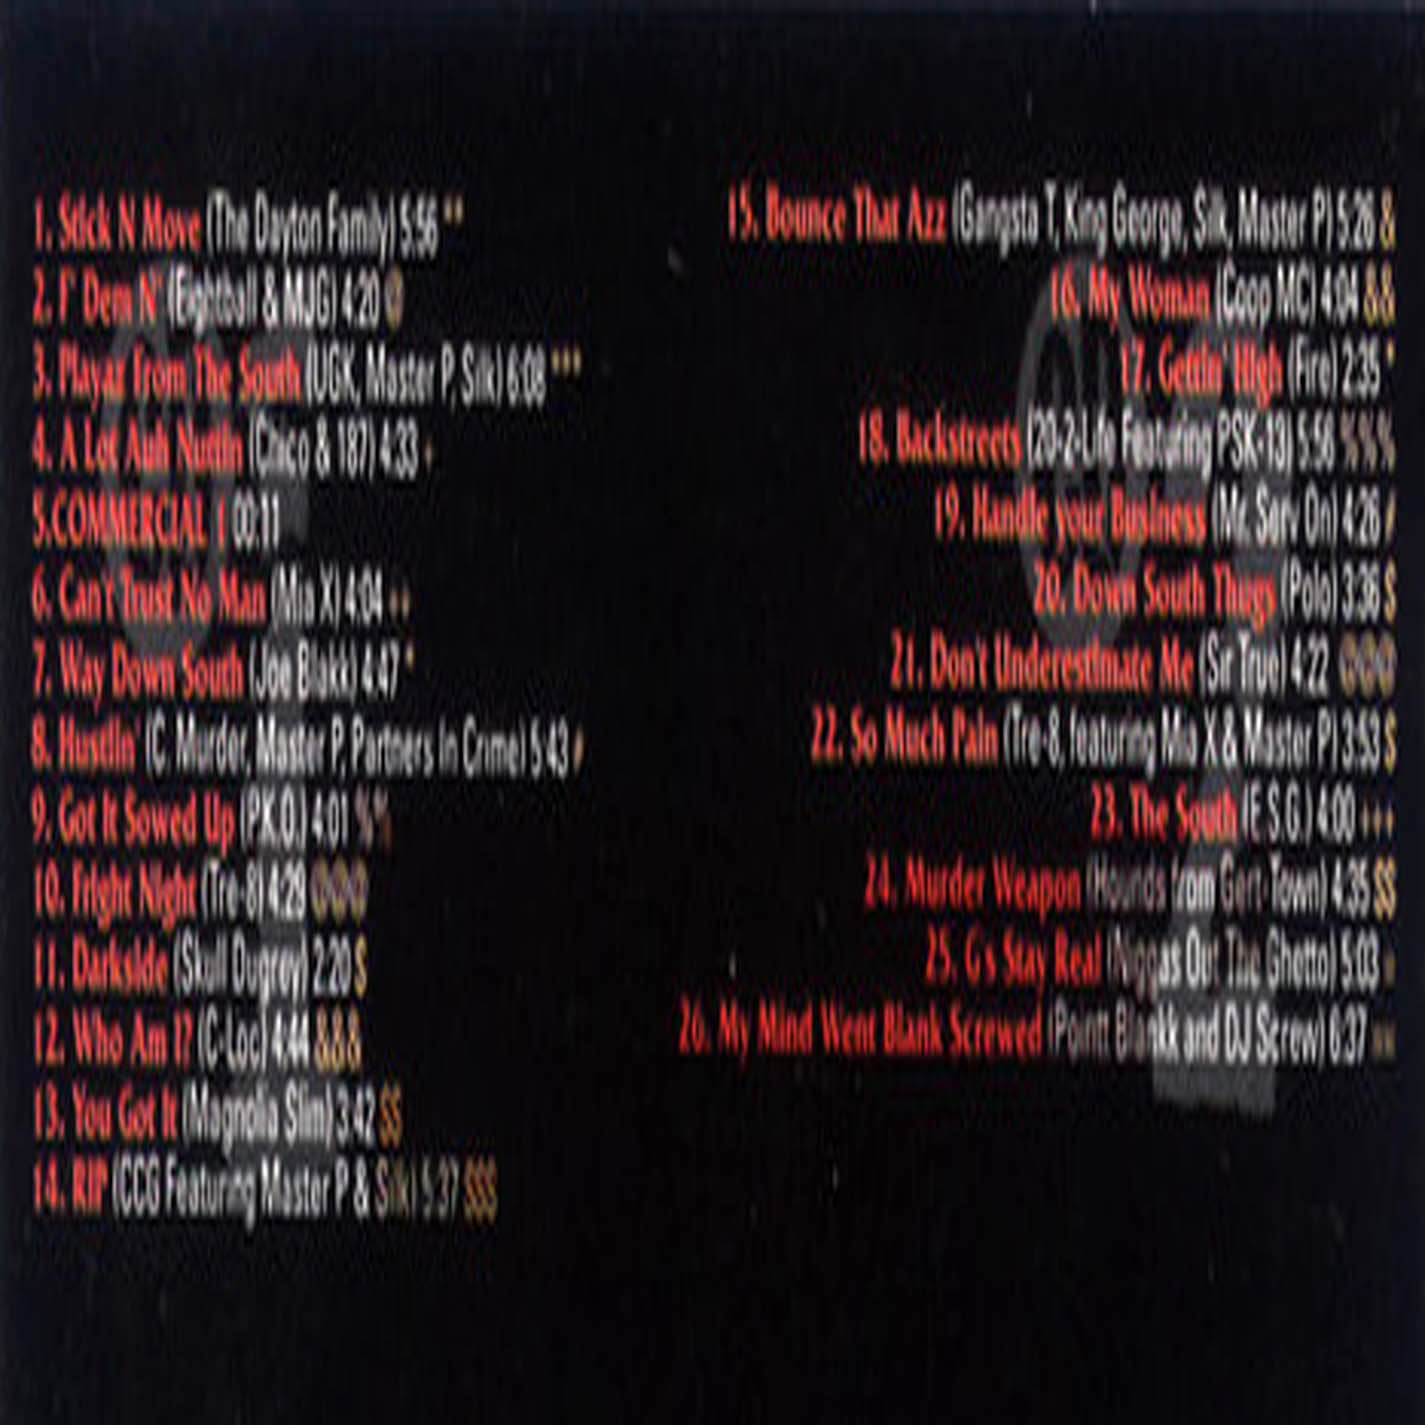 D0WN S0UTH HUSTLERS - B0UNCIN AND SWANGIN (CD LP) 2 DISC SET c1995